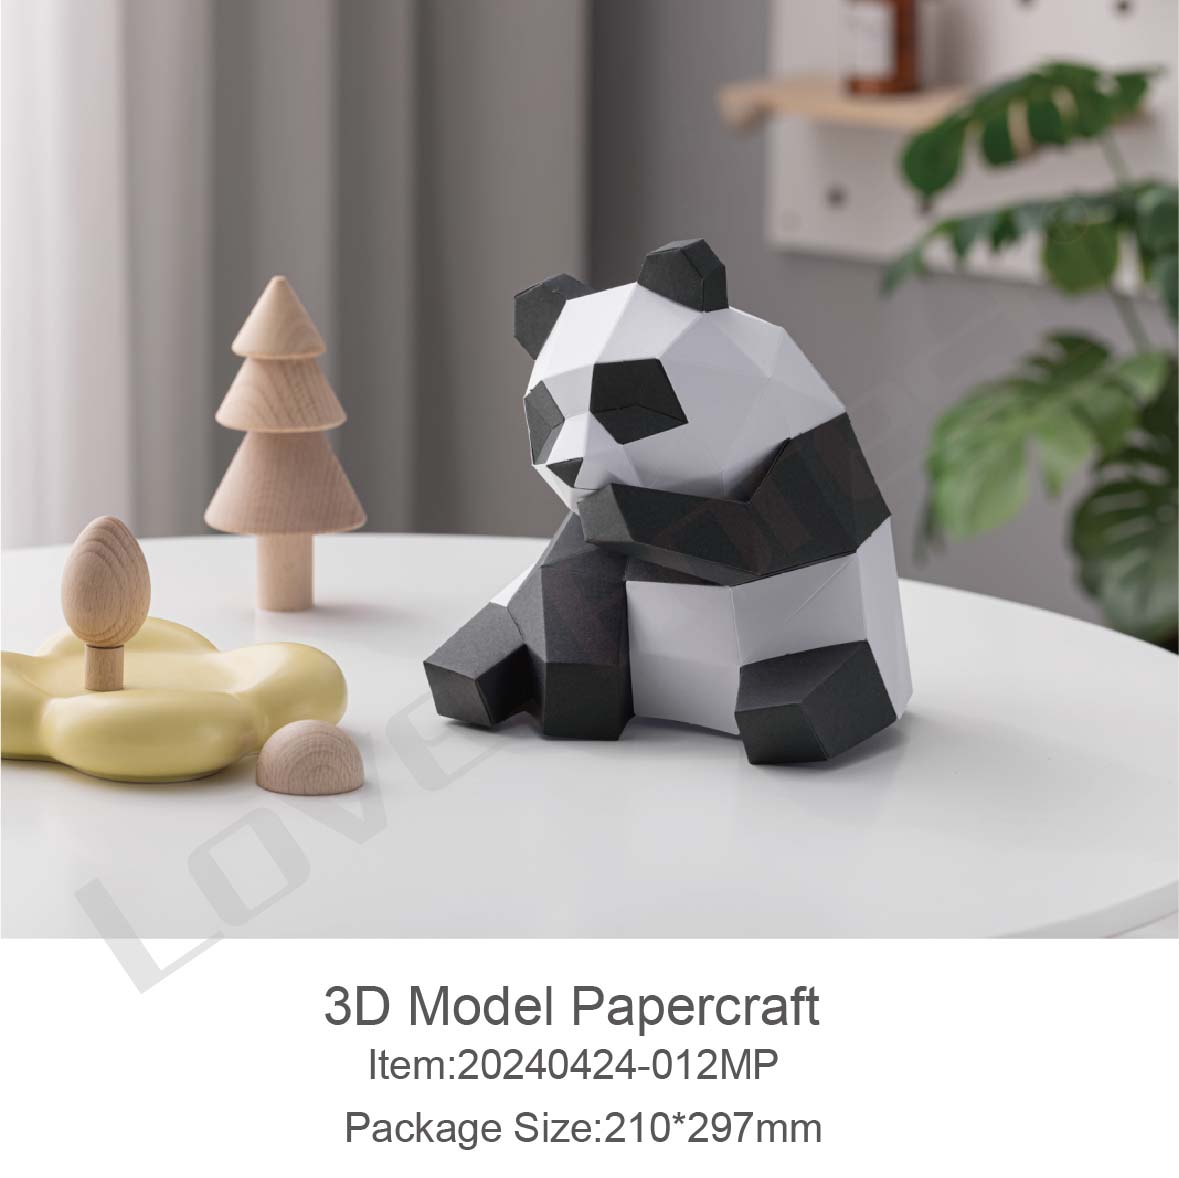 3D Model Papercraft